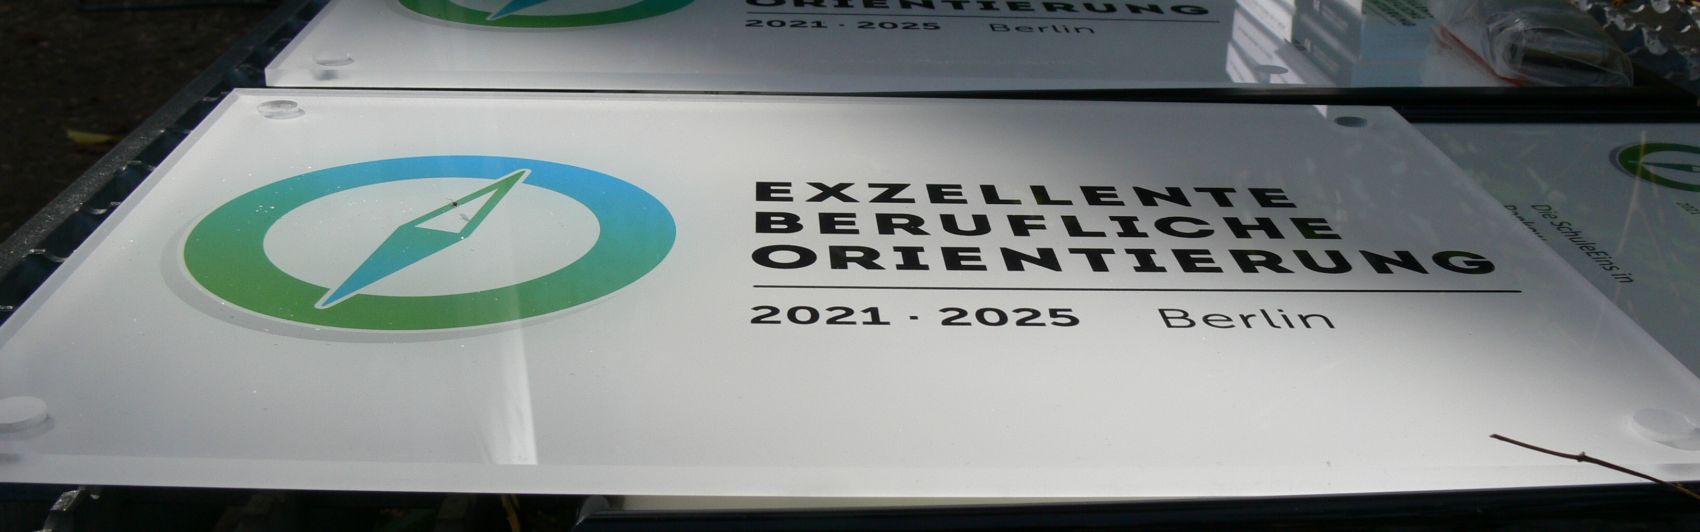 Verleihung Qualitätssiegel Berlin 2021